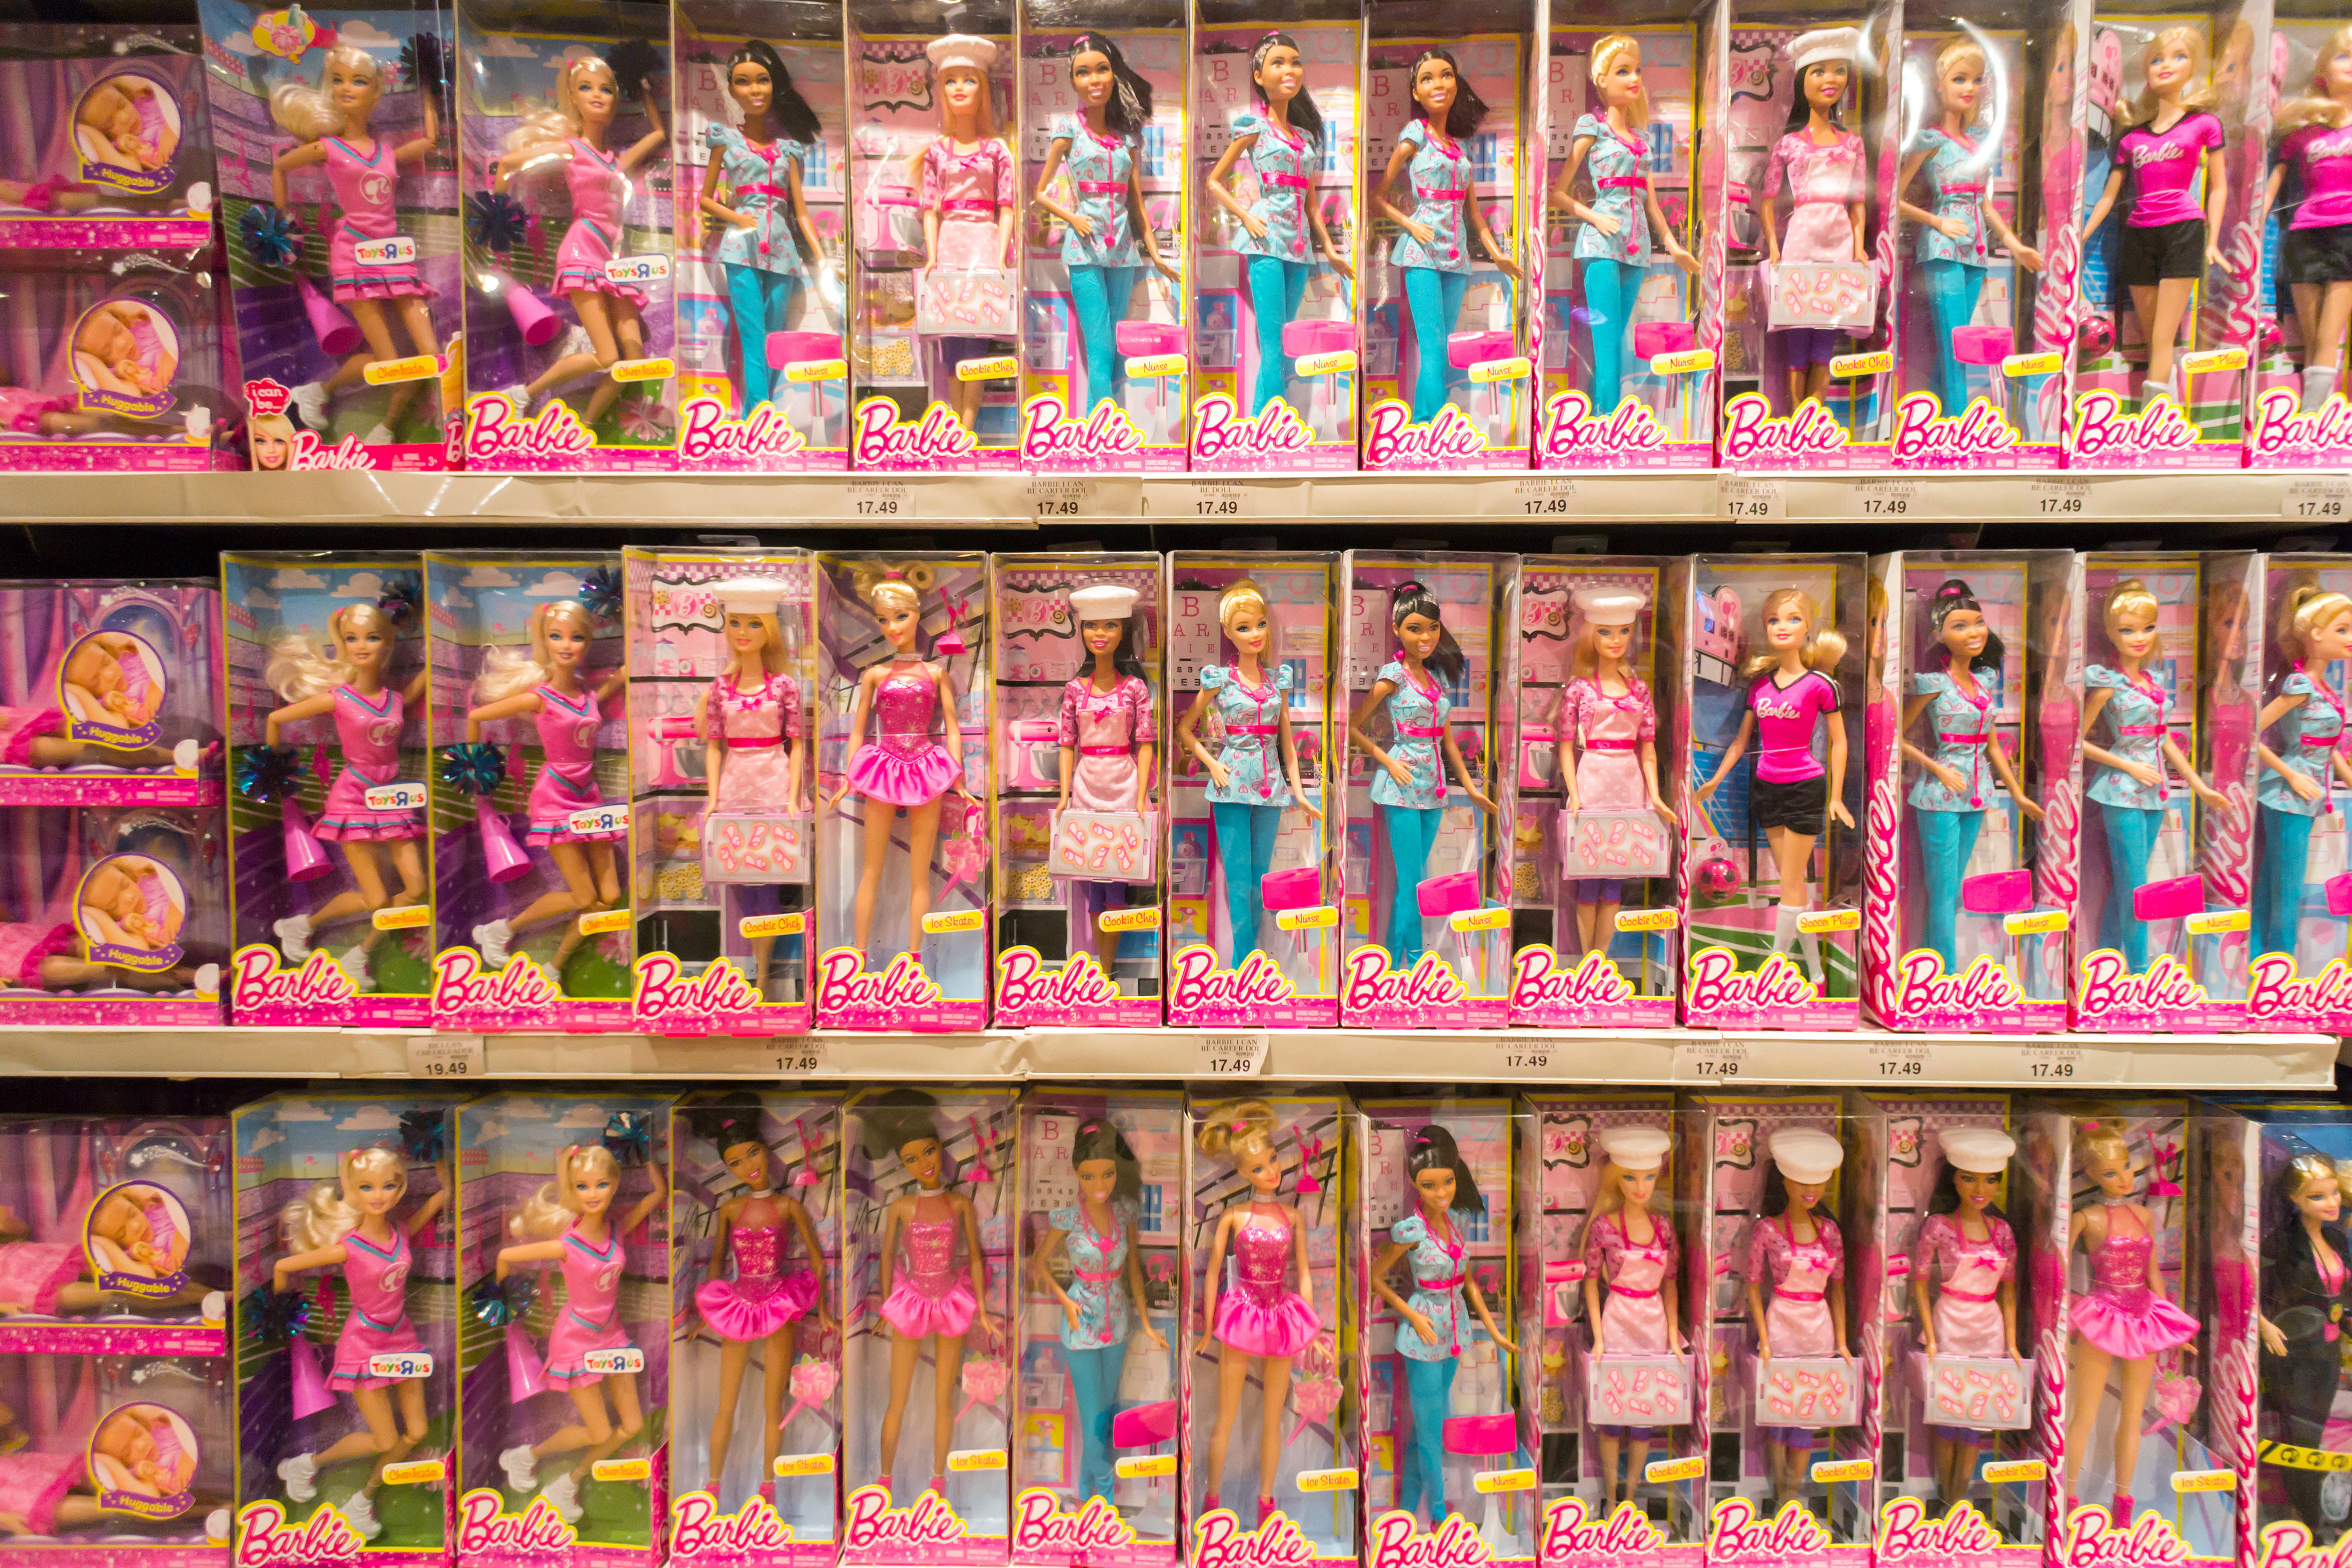 Barbies on shelves